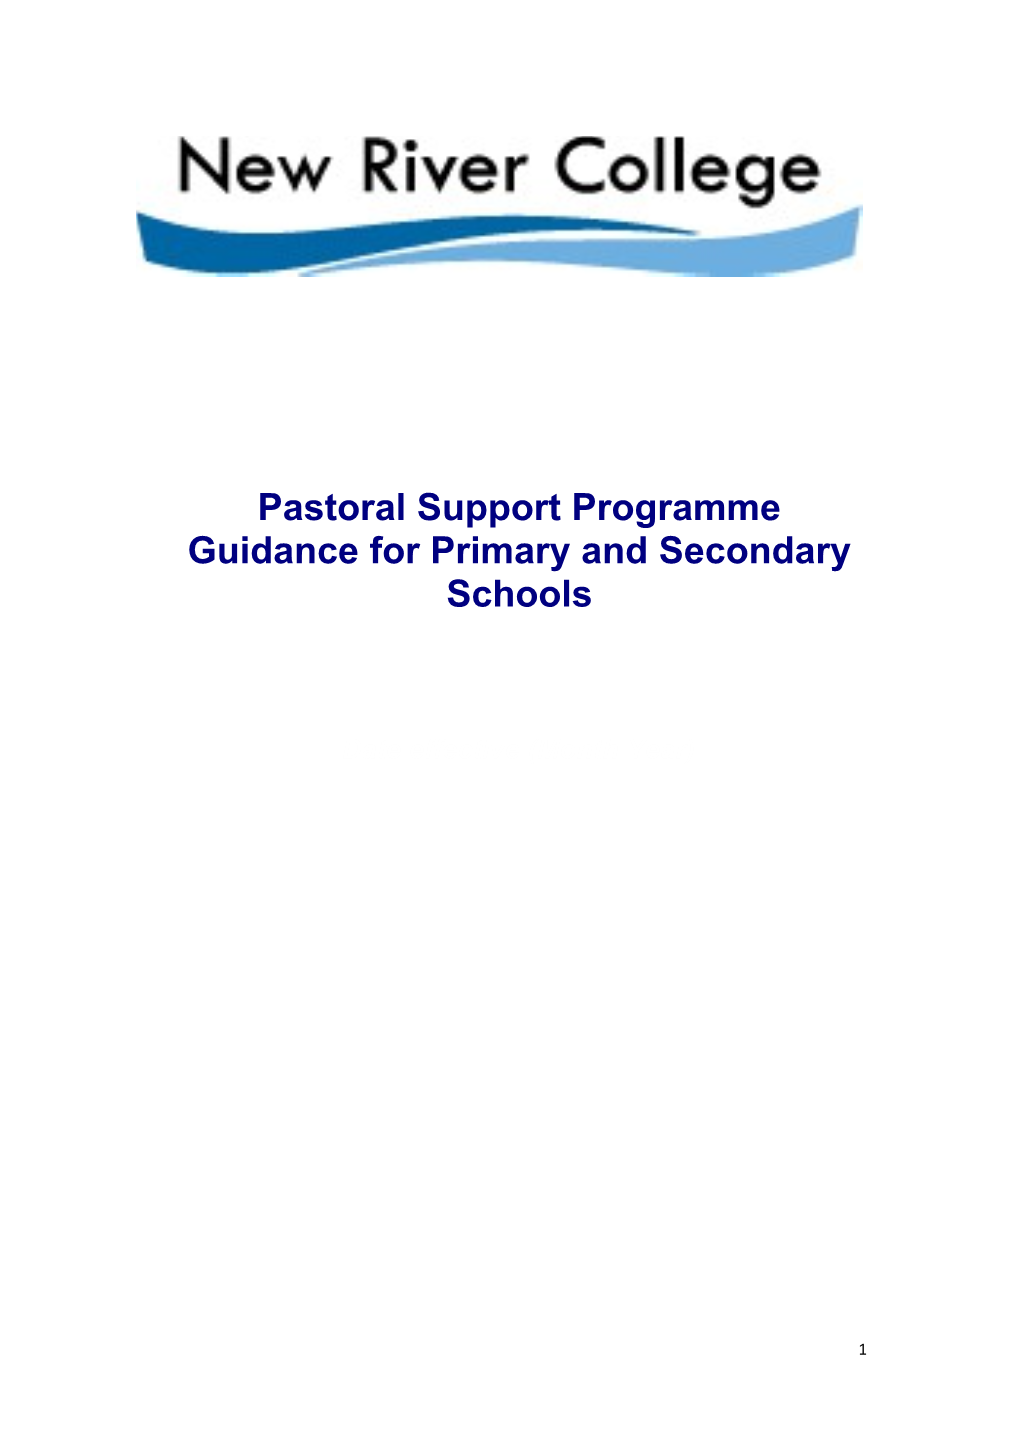 2Pre-Pastoral Support Programme: School Information